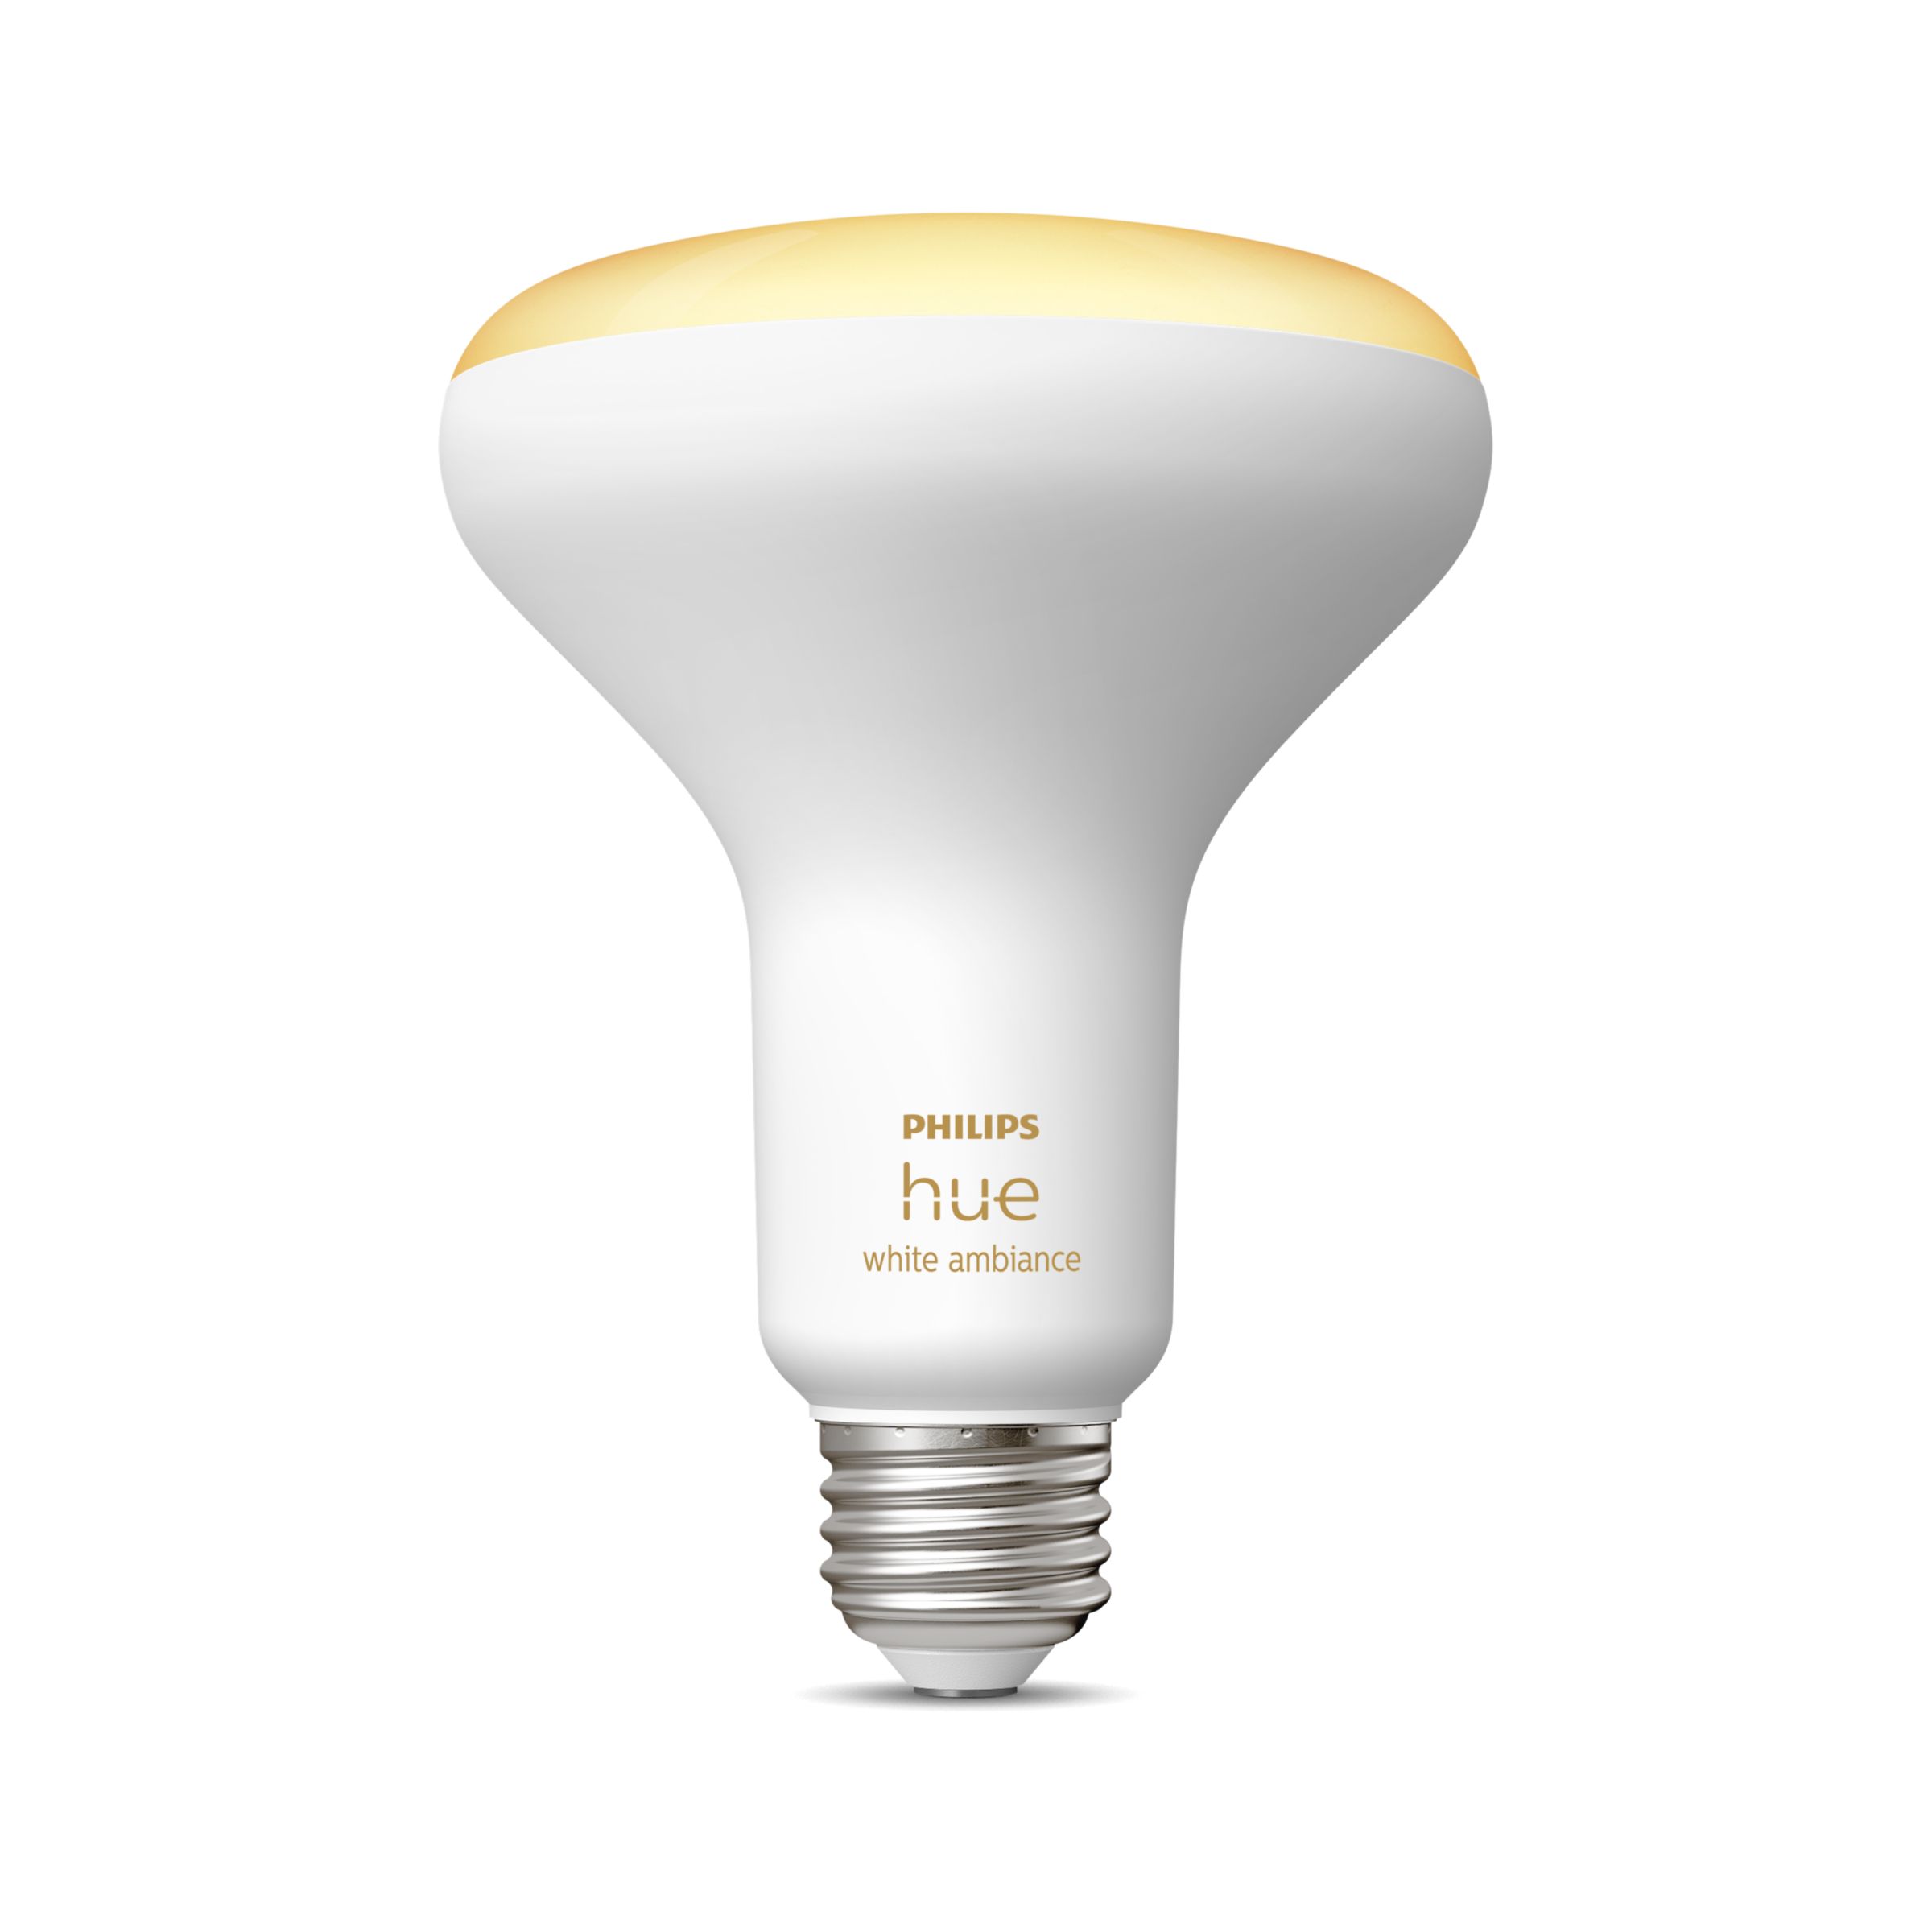 Hue White ambiance BR30 E26 smart bulb | Philips Hue US